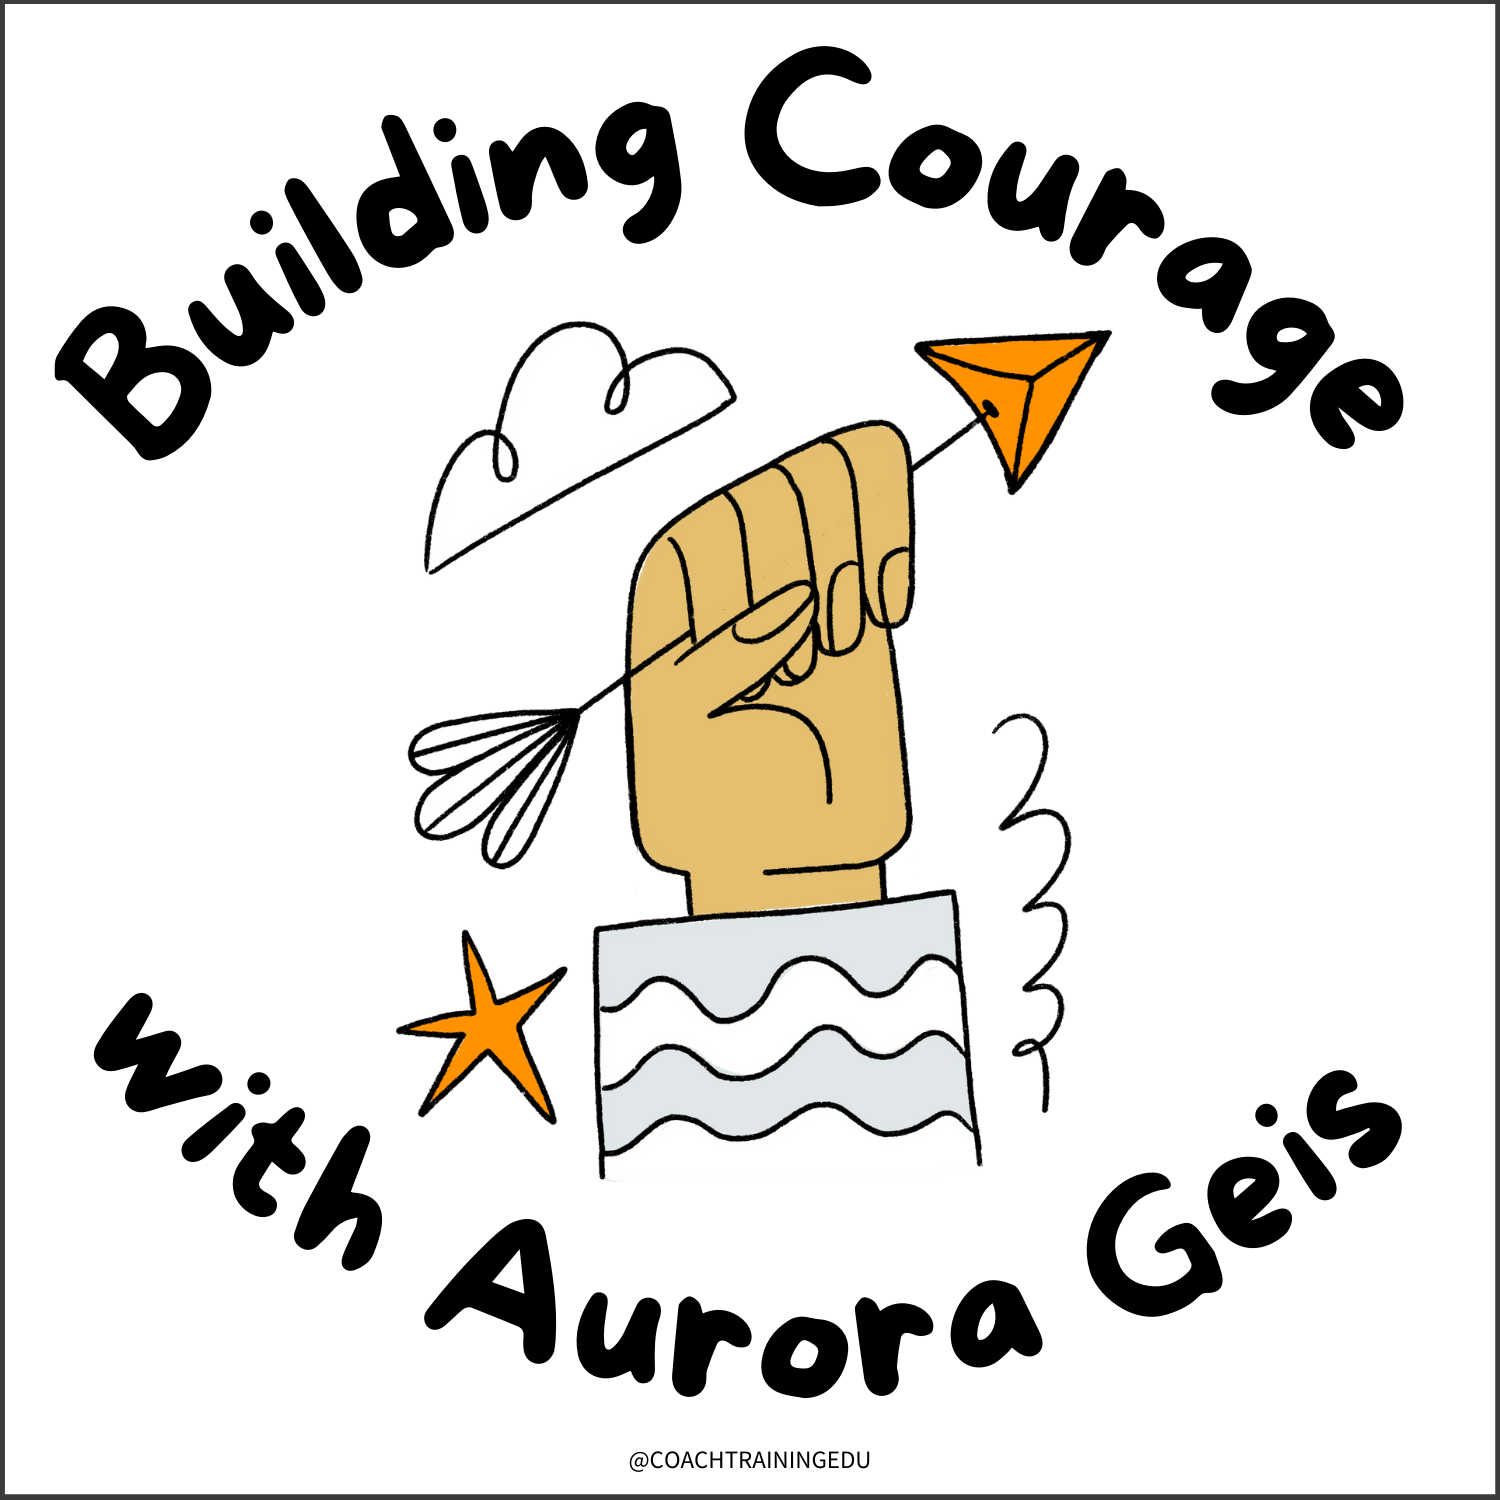 Building Courage with Aurora Geis